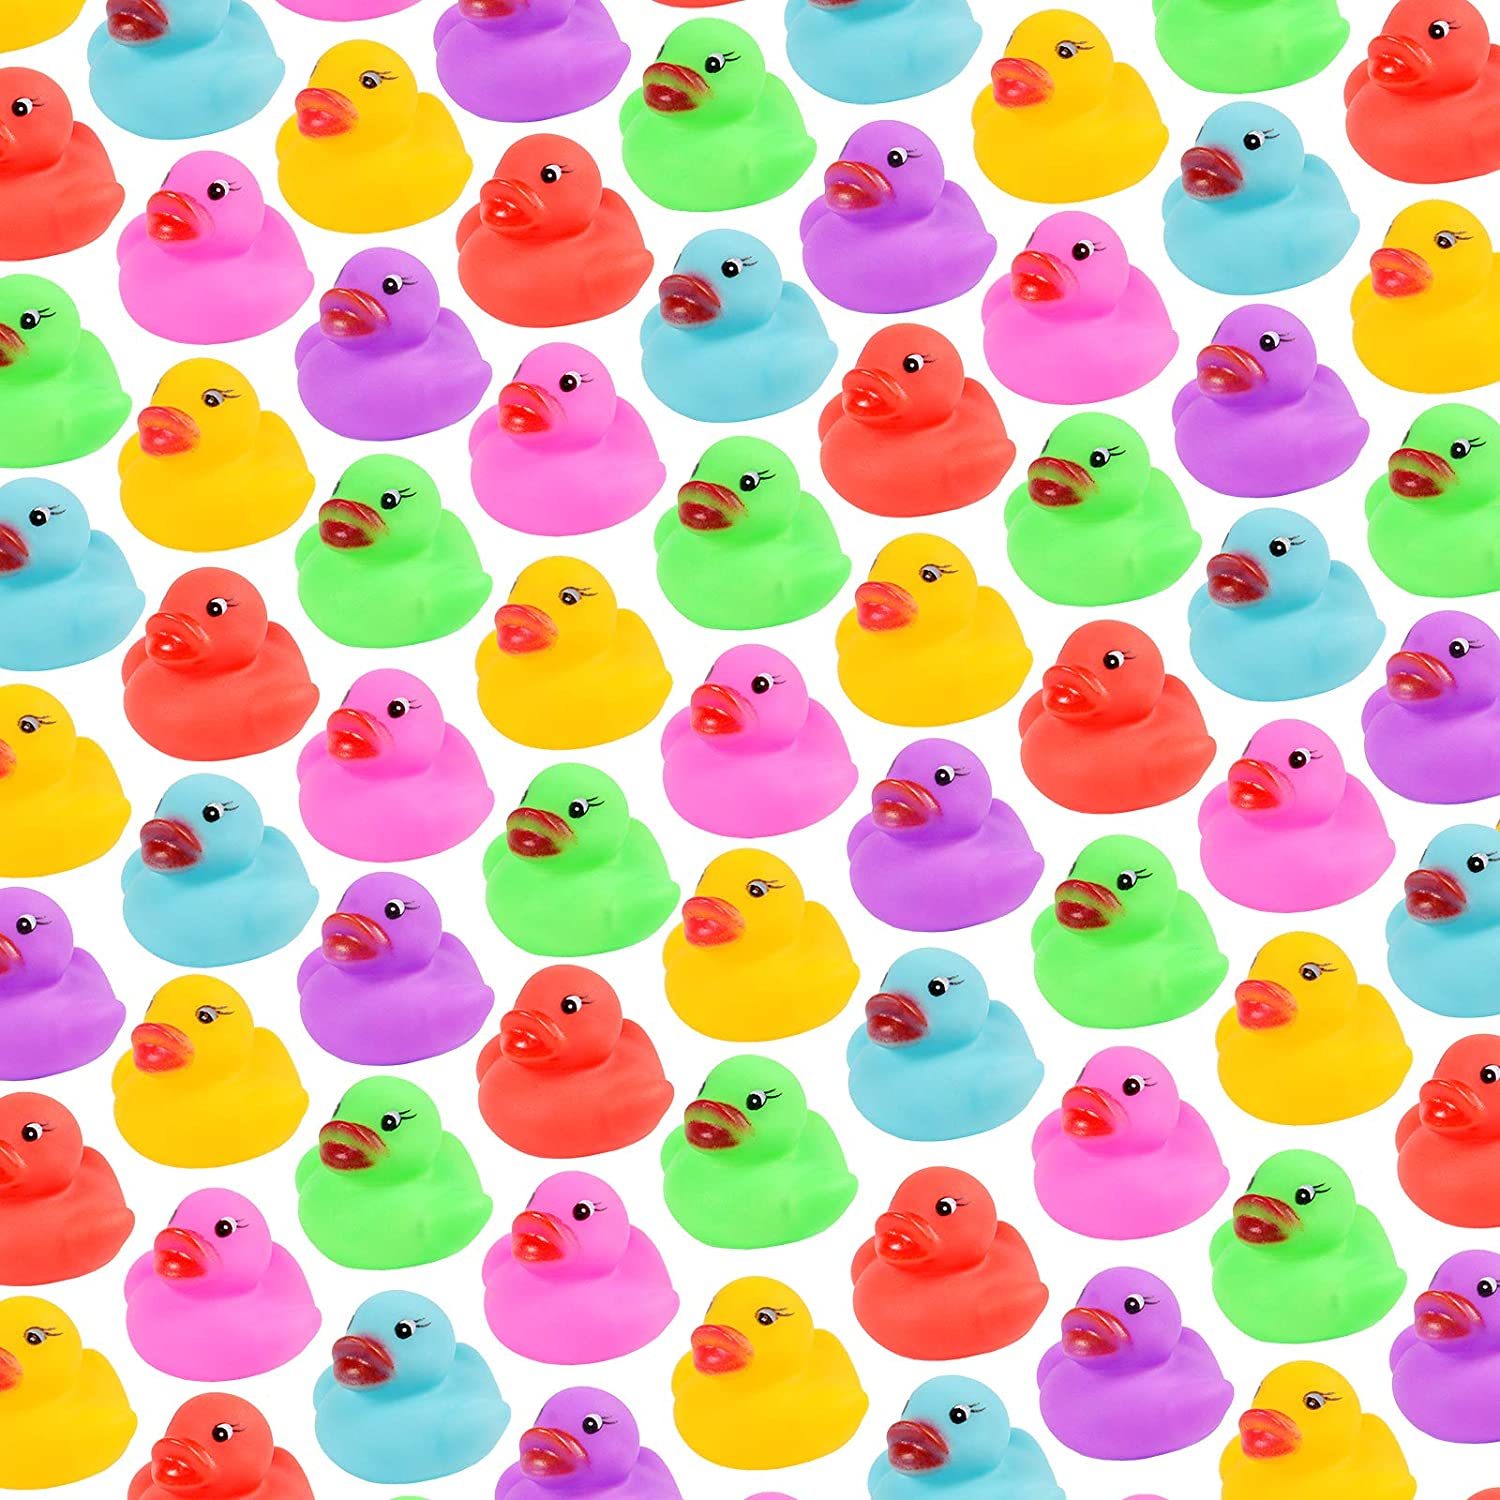 54-Pack Mini Bath Ducks Set, Mini Colorful Rubber Duckies Bath Toy For